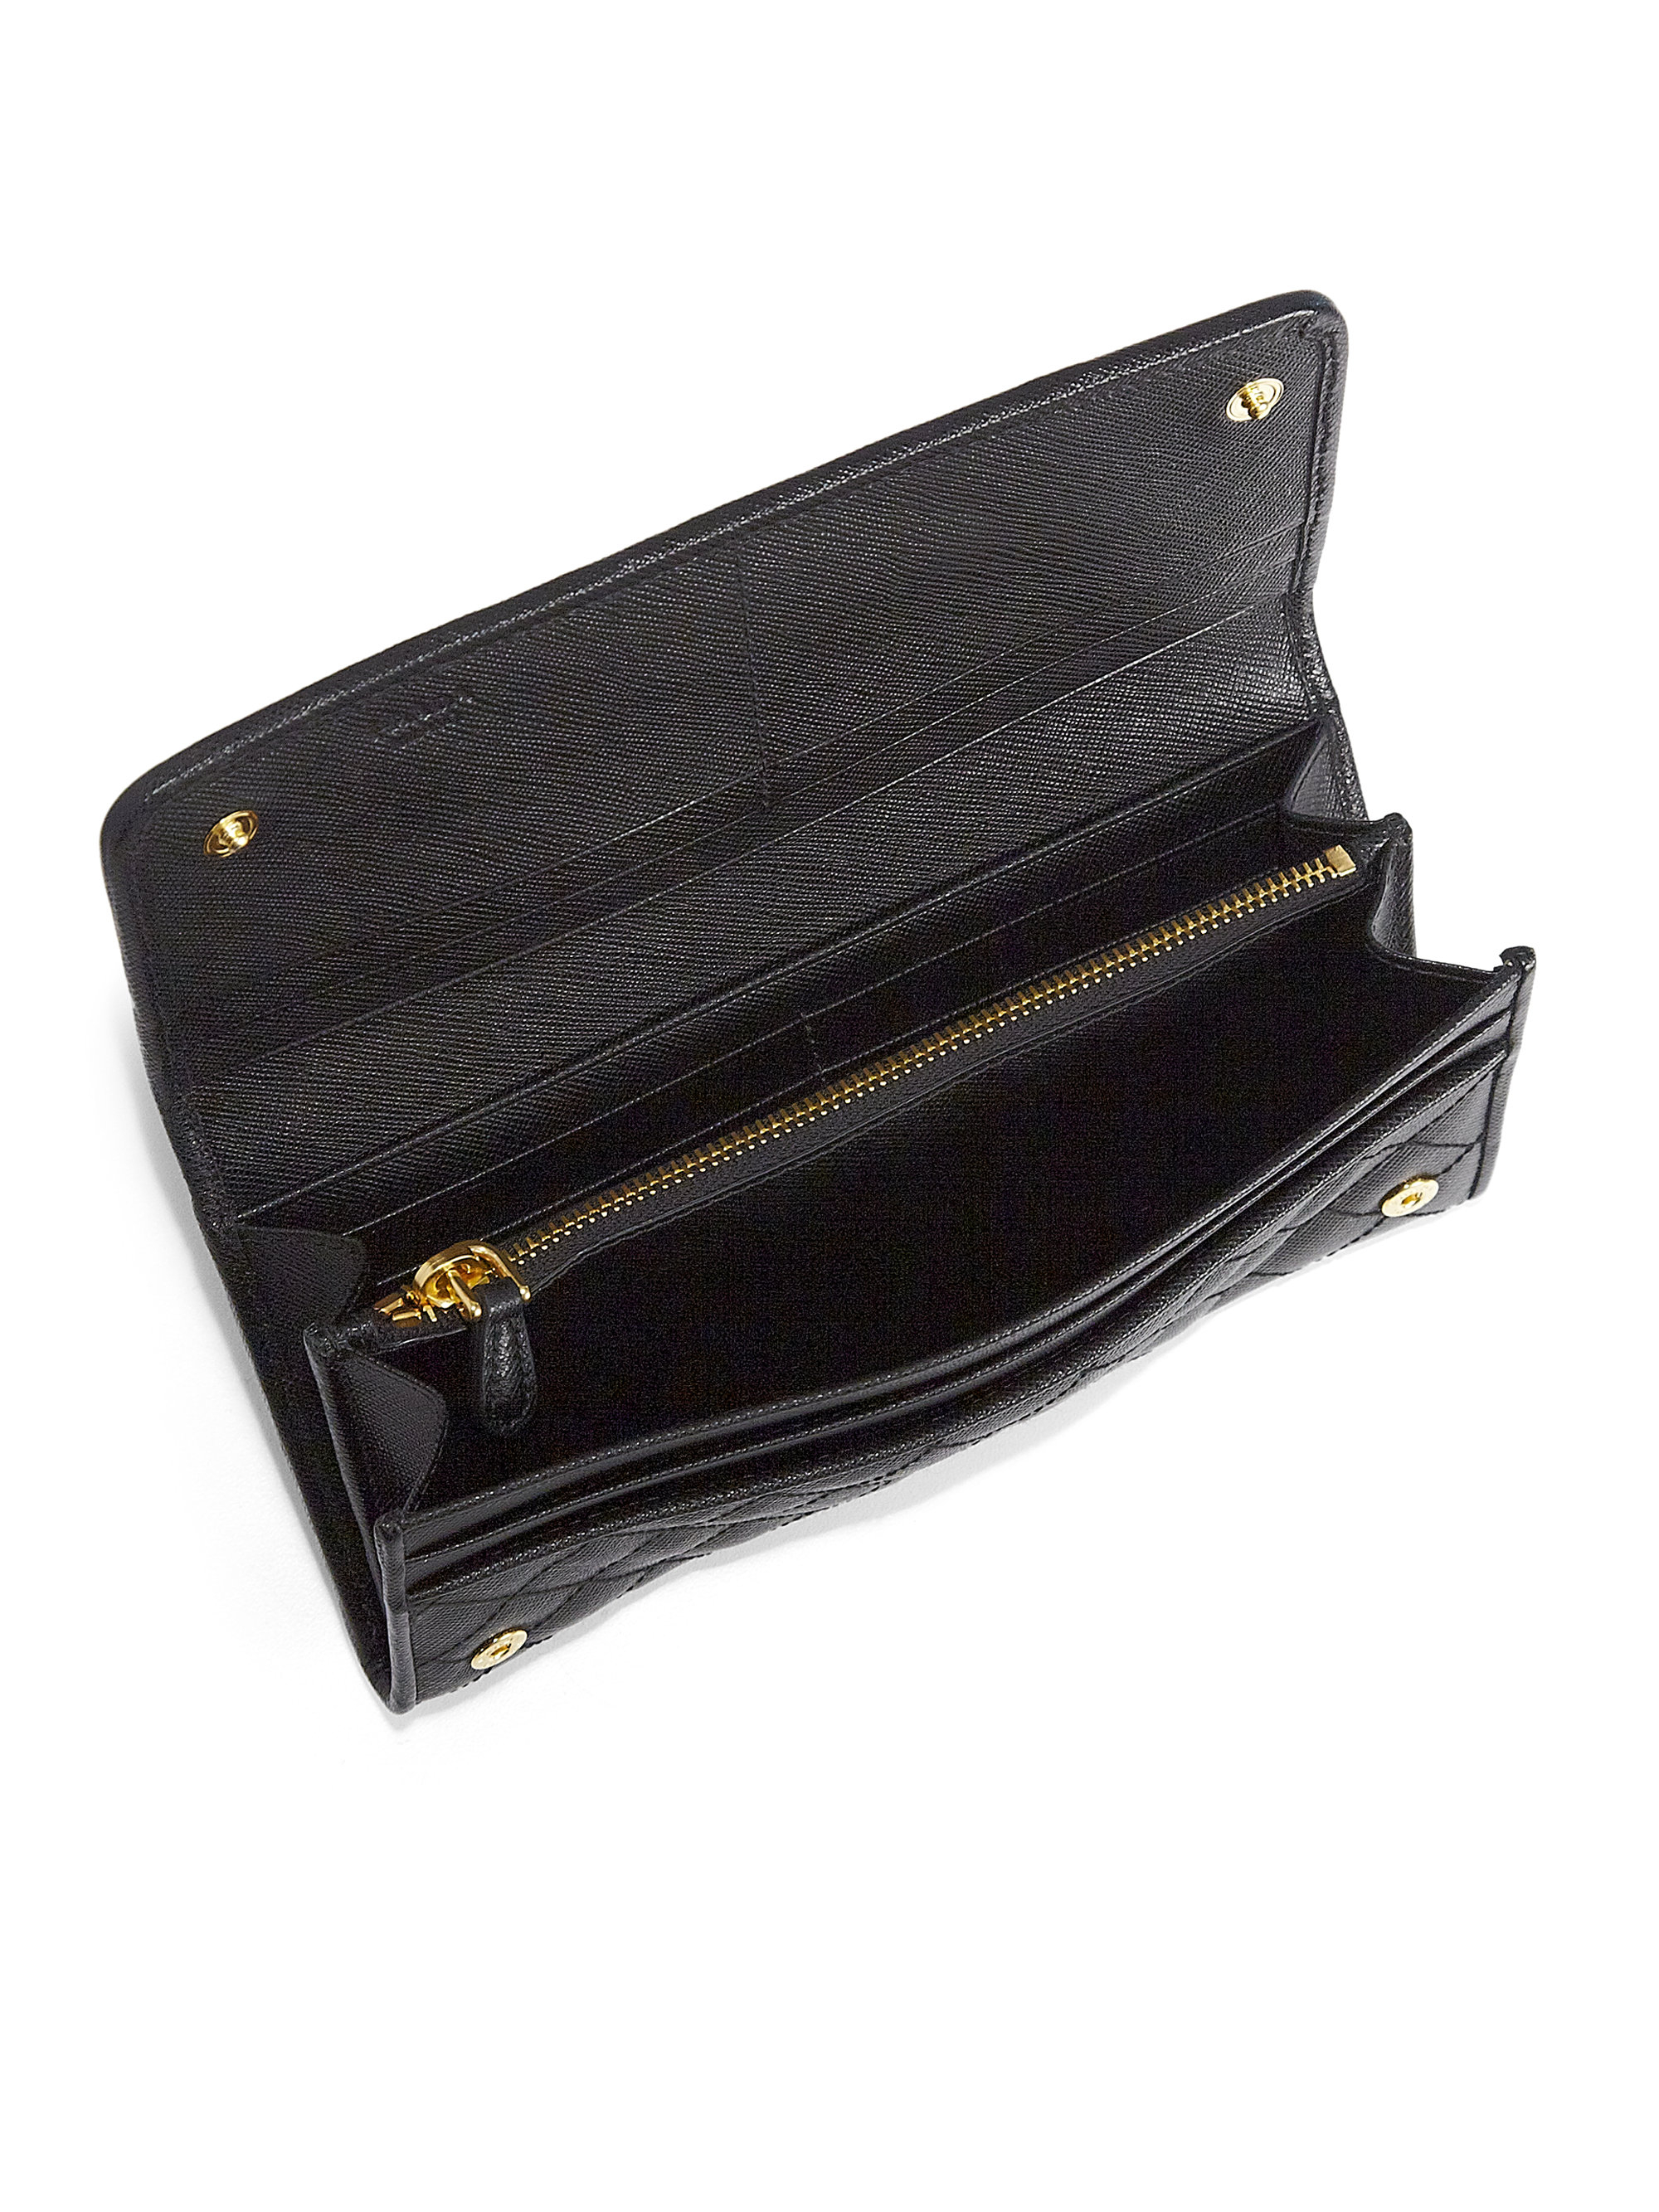 Prada Quilted Saffiano Continental Wallet in Black (NERO-BLACK) | Lyst  